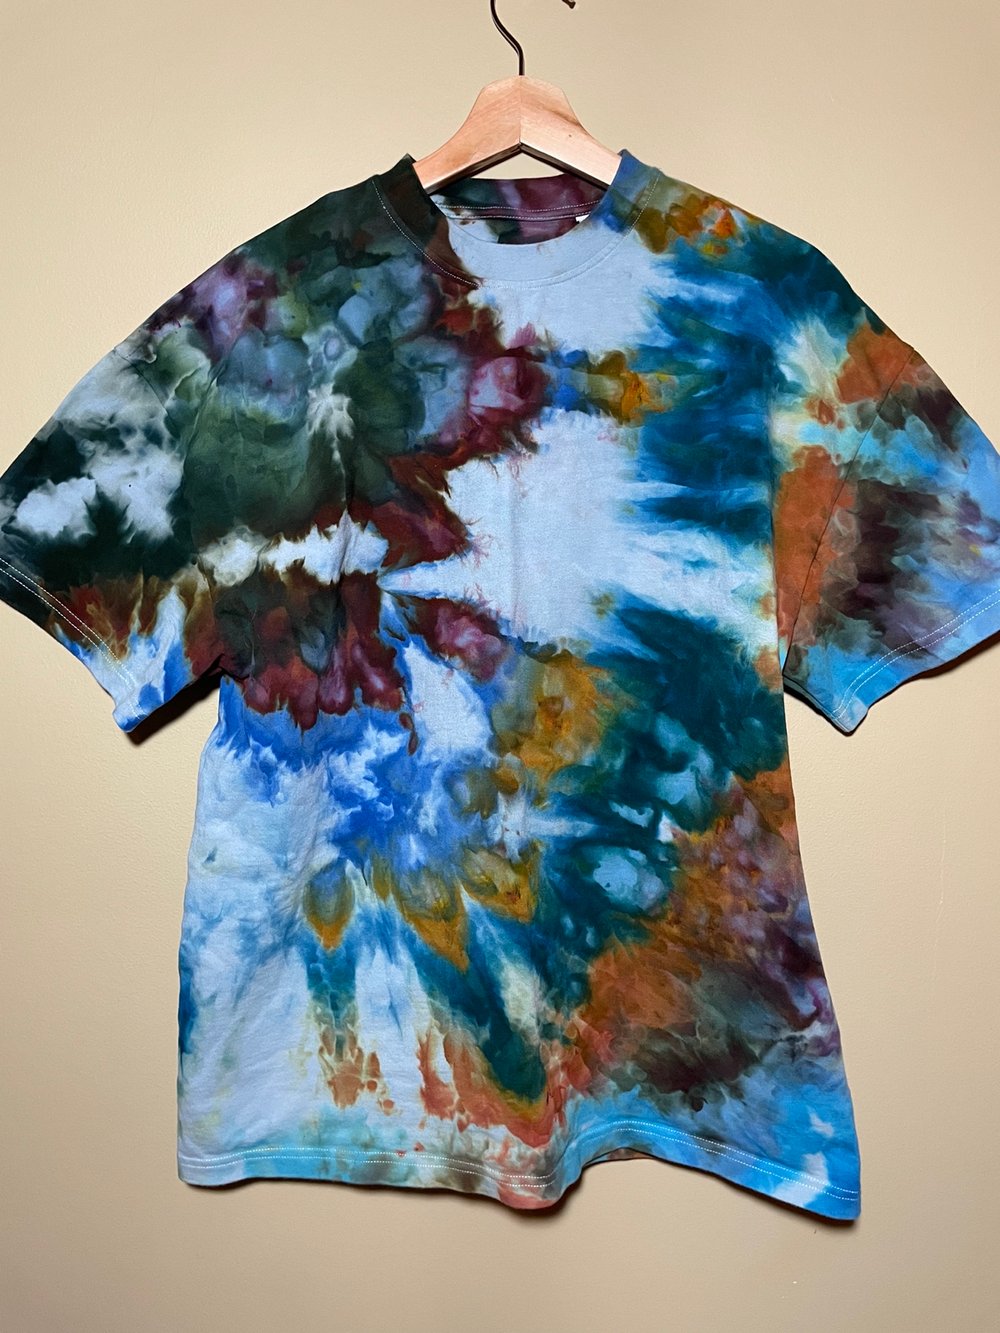 Tie-Dye Shirt #13 - S